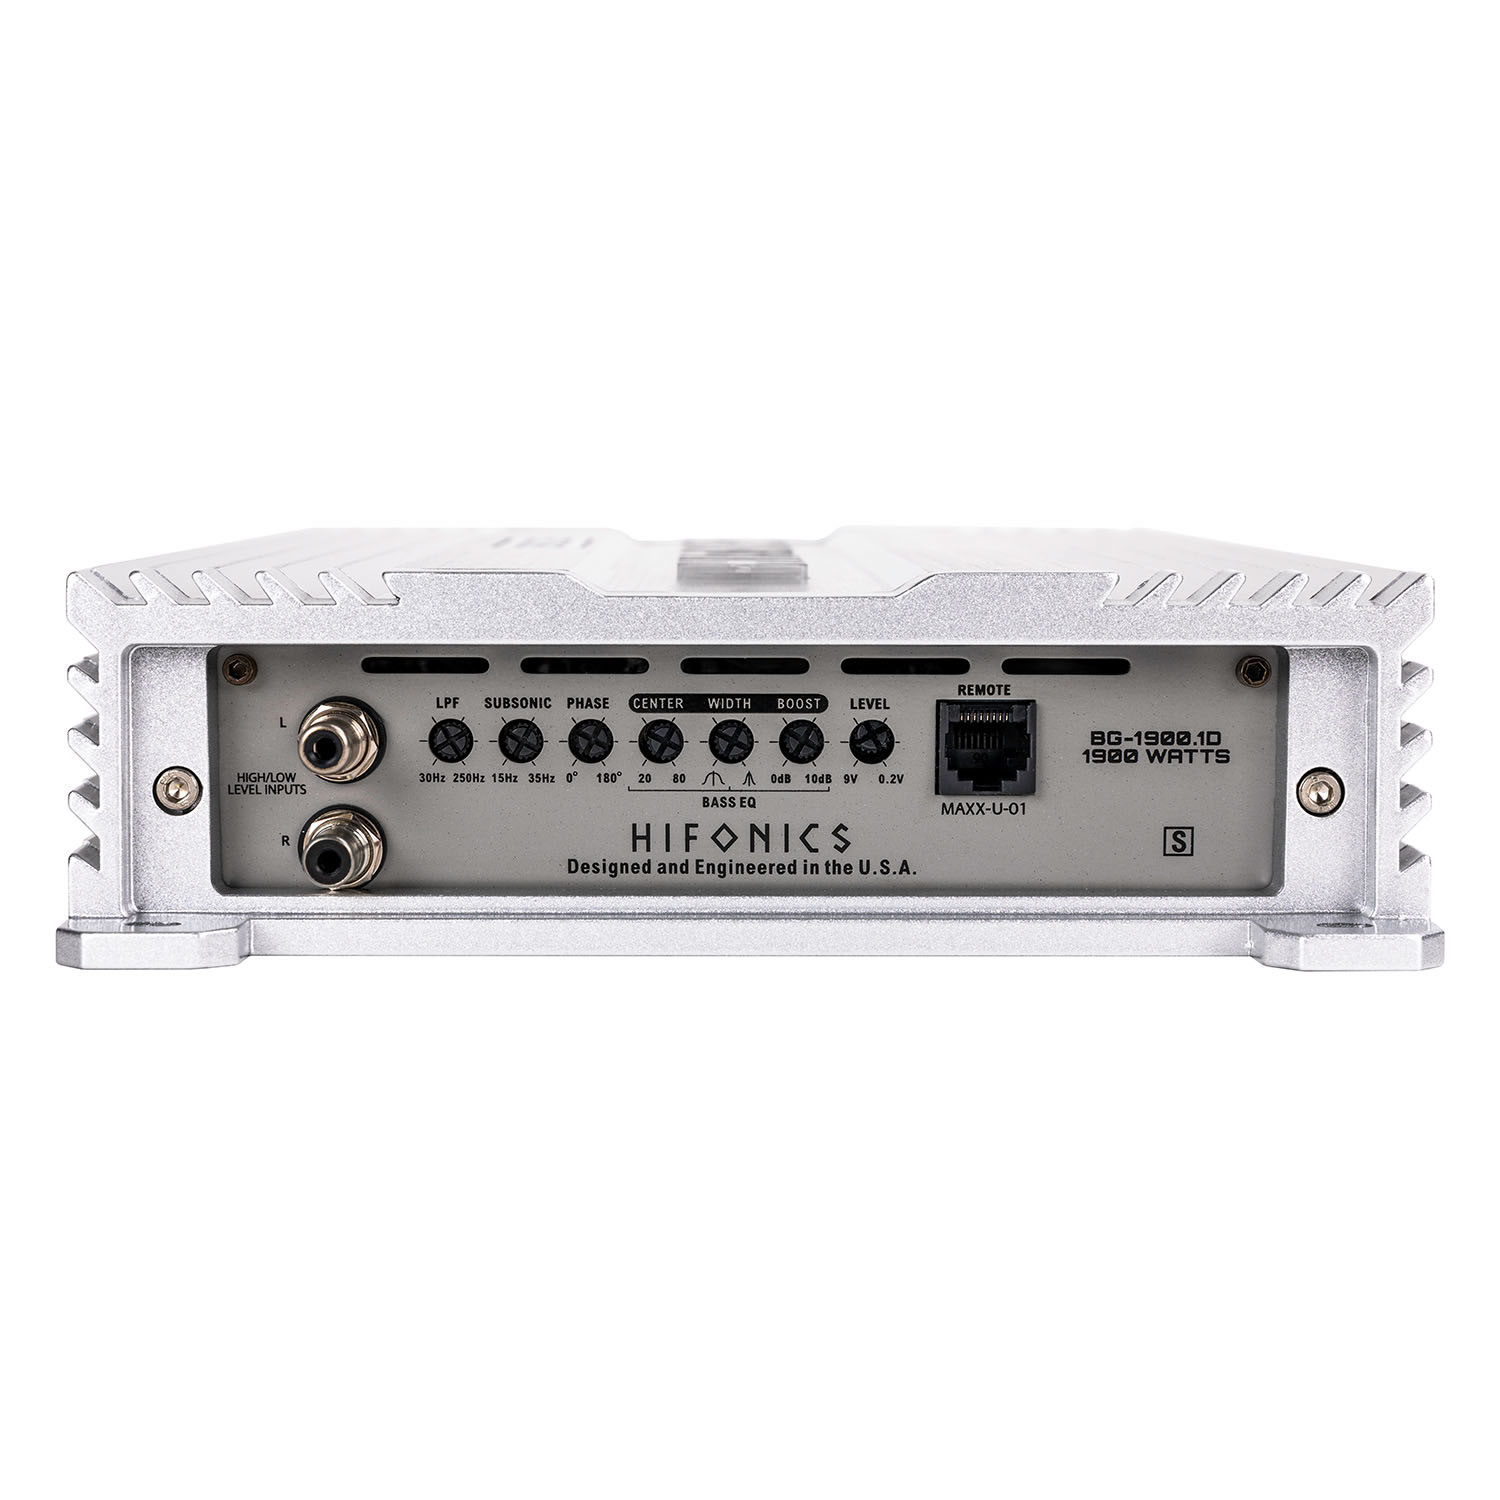 ZG-3200.1D ZEUS GAMMA 3200 Watt Amplifier | Hifonics